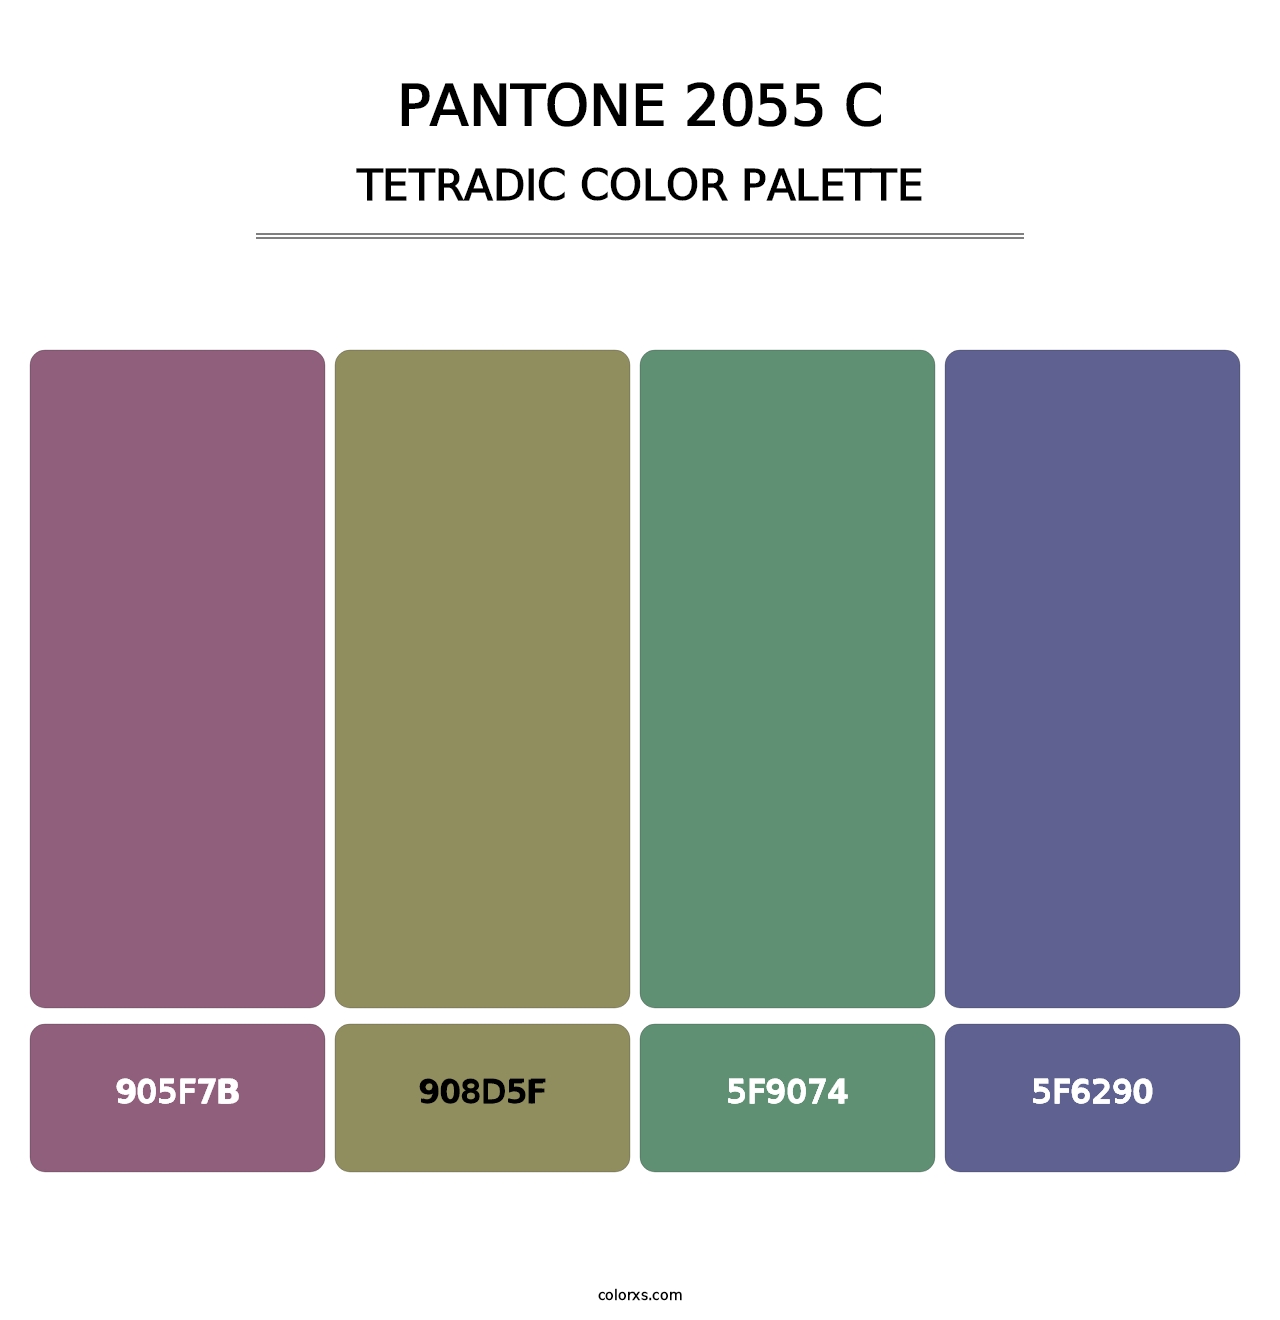 PANTONE 2055 C - Tetradic Color Palette